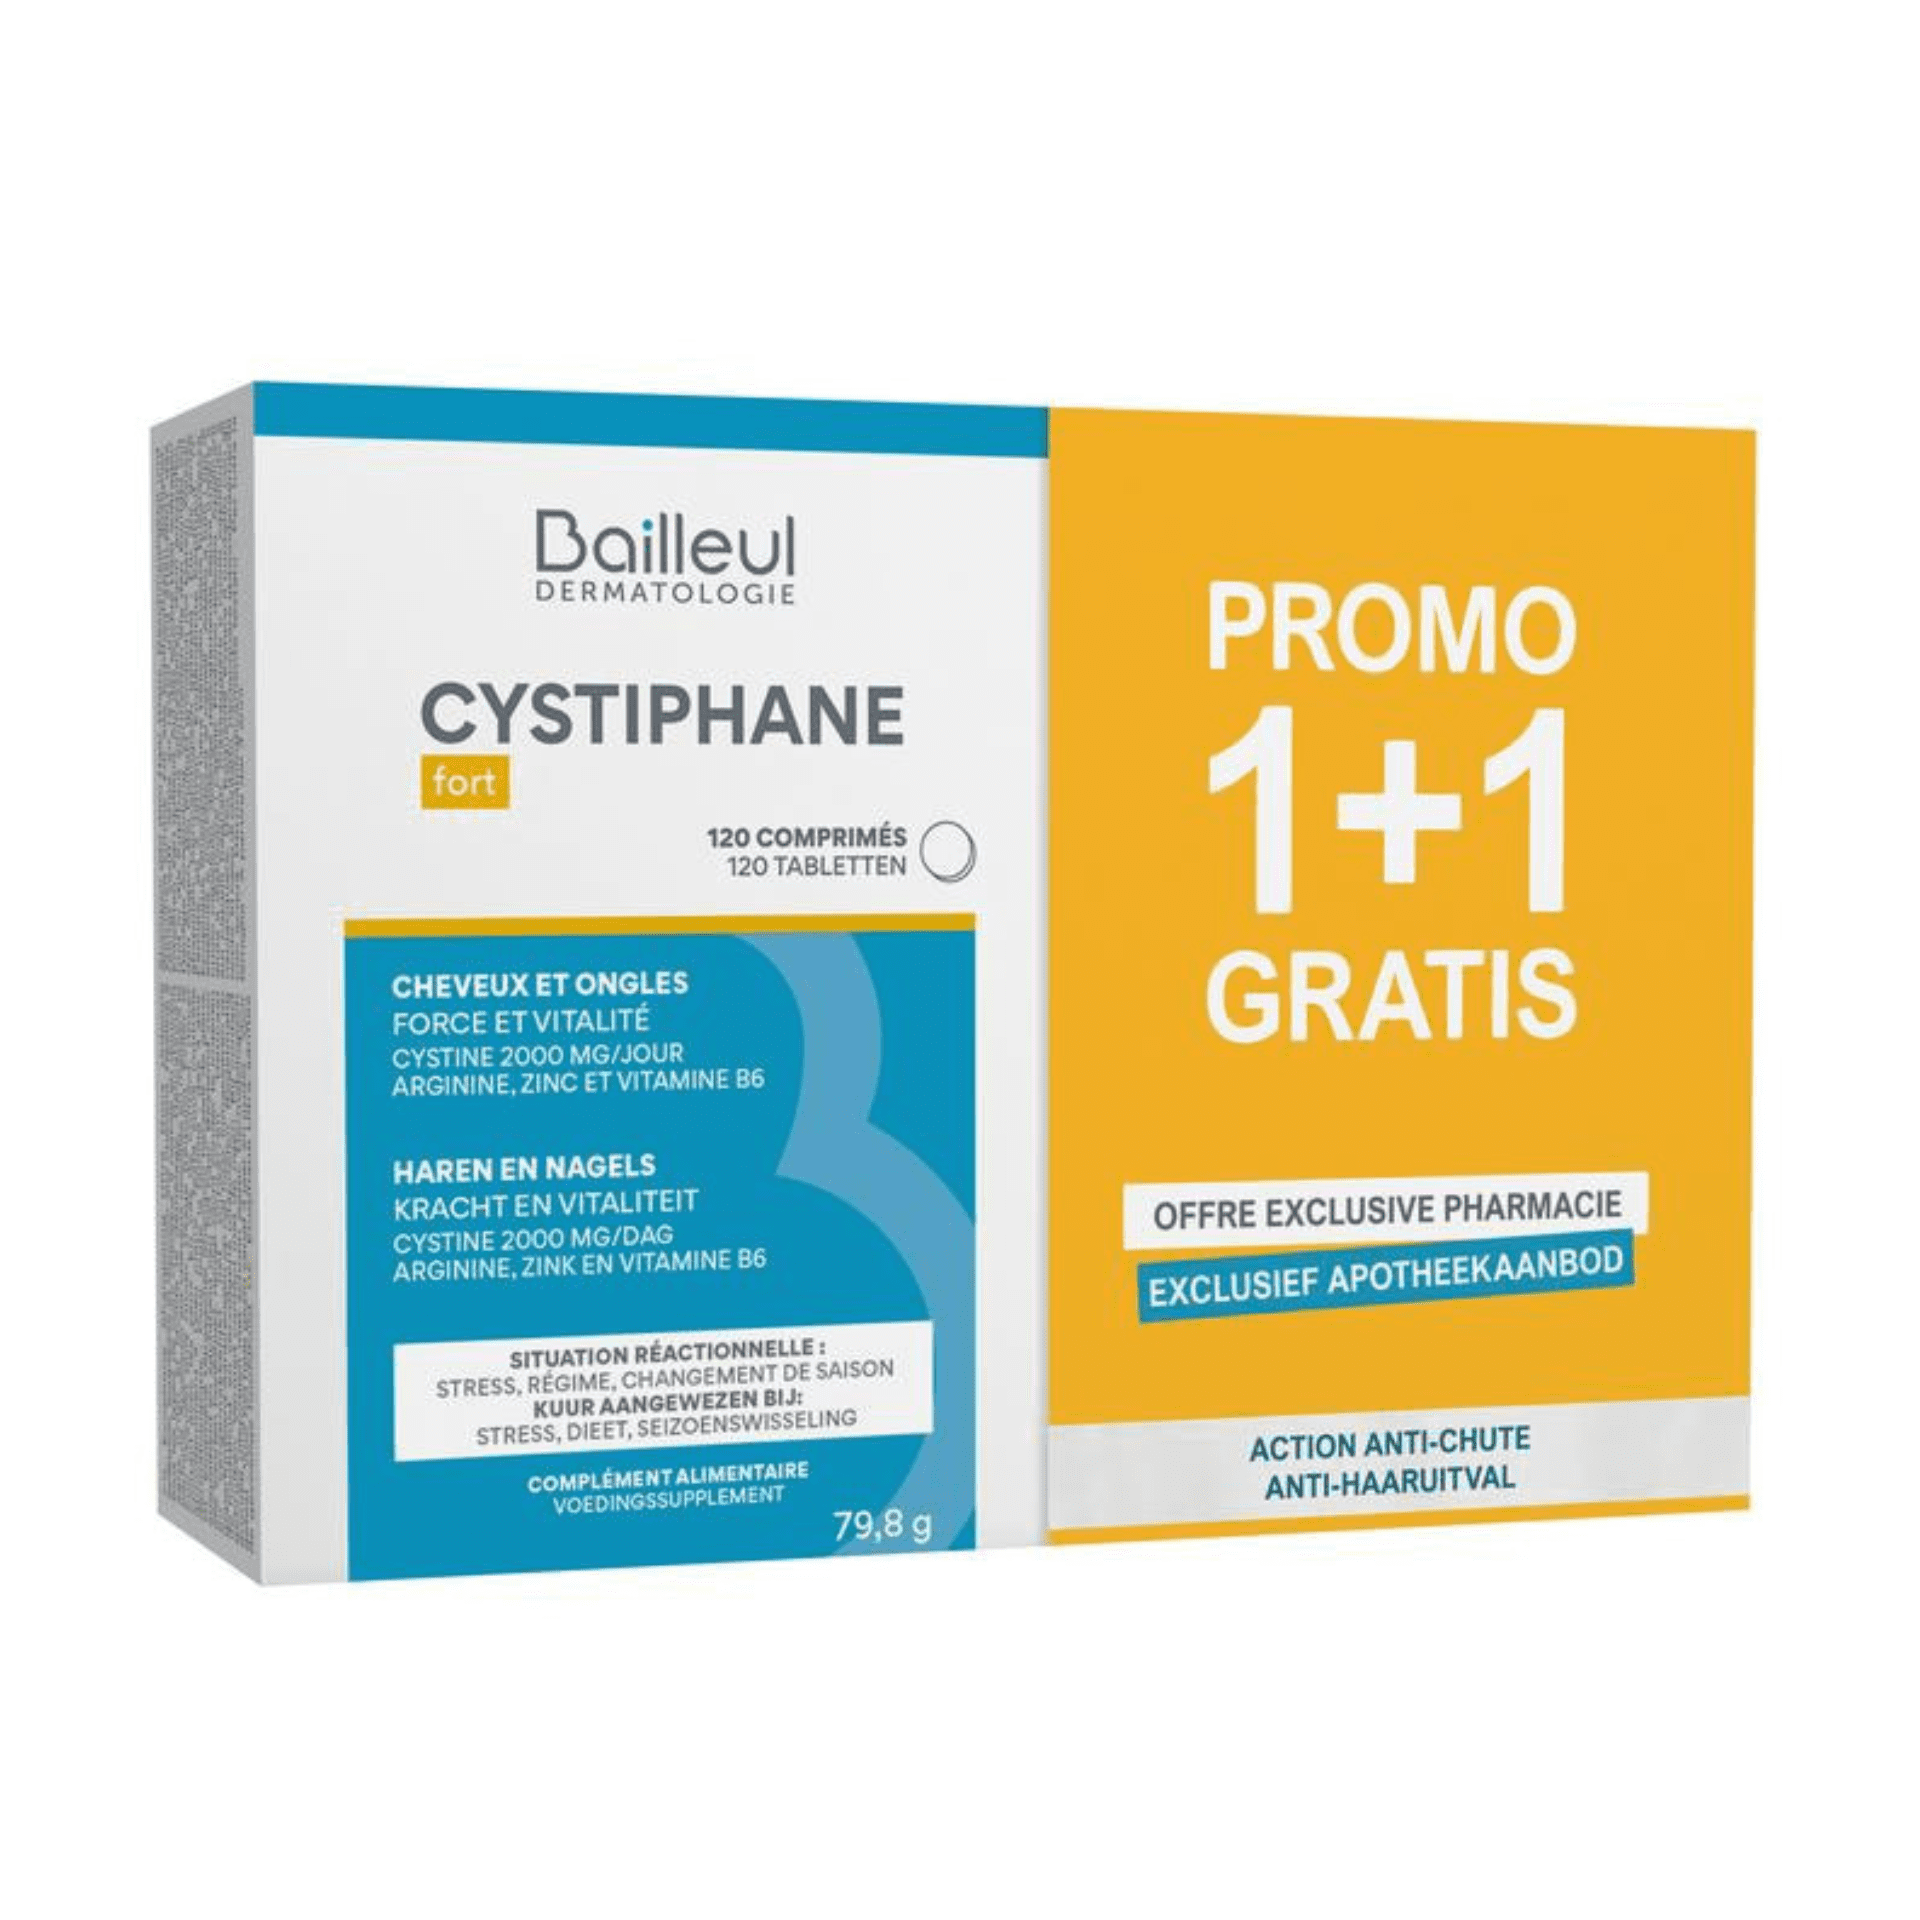 Cystiphane Duo Pack 1+1 Gratis